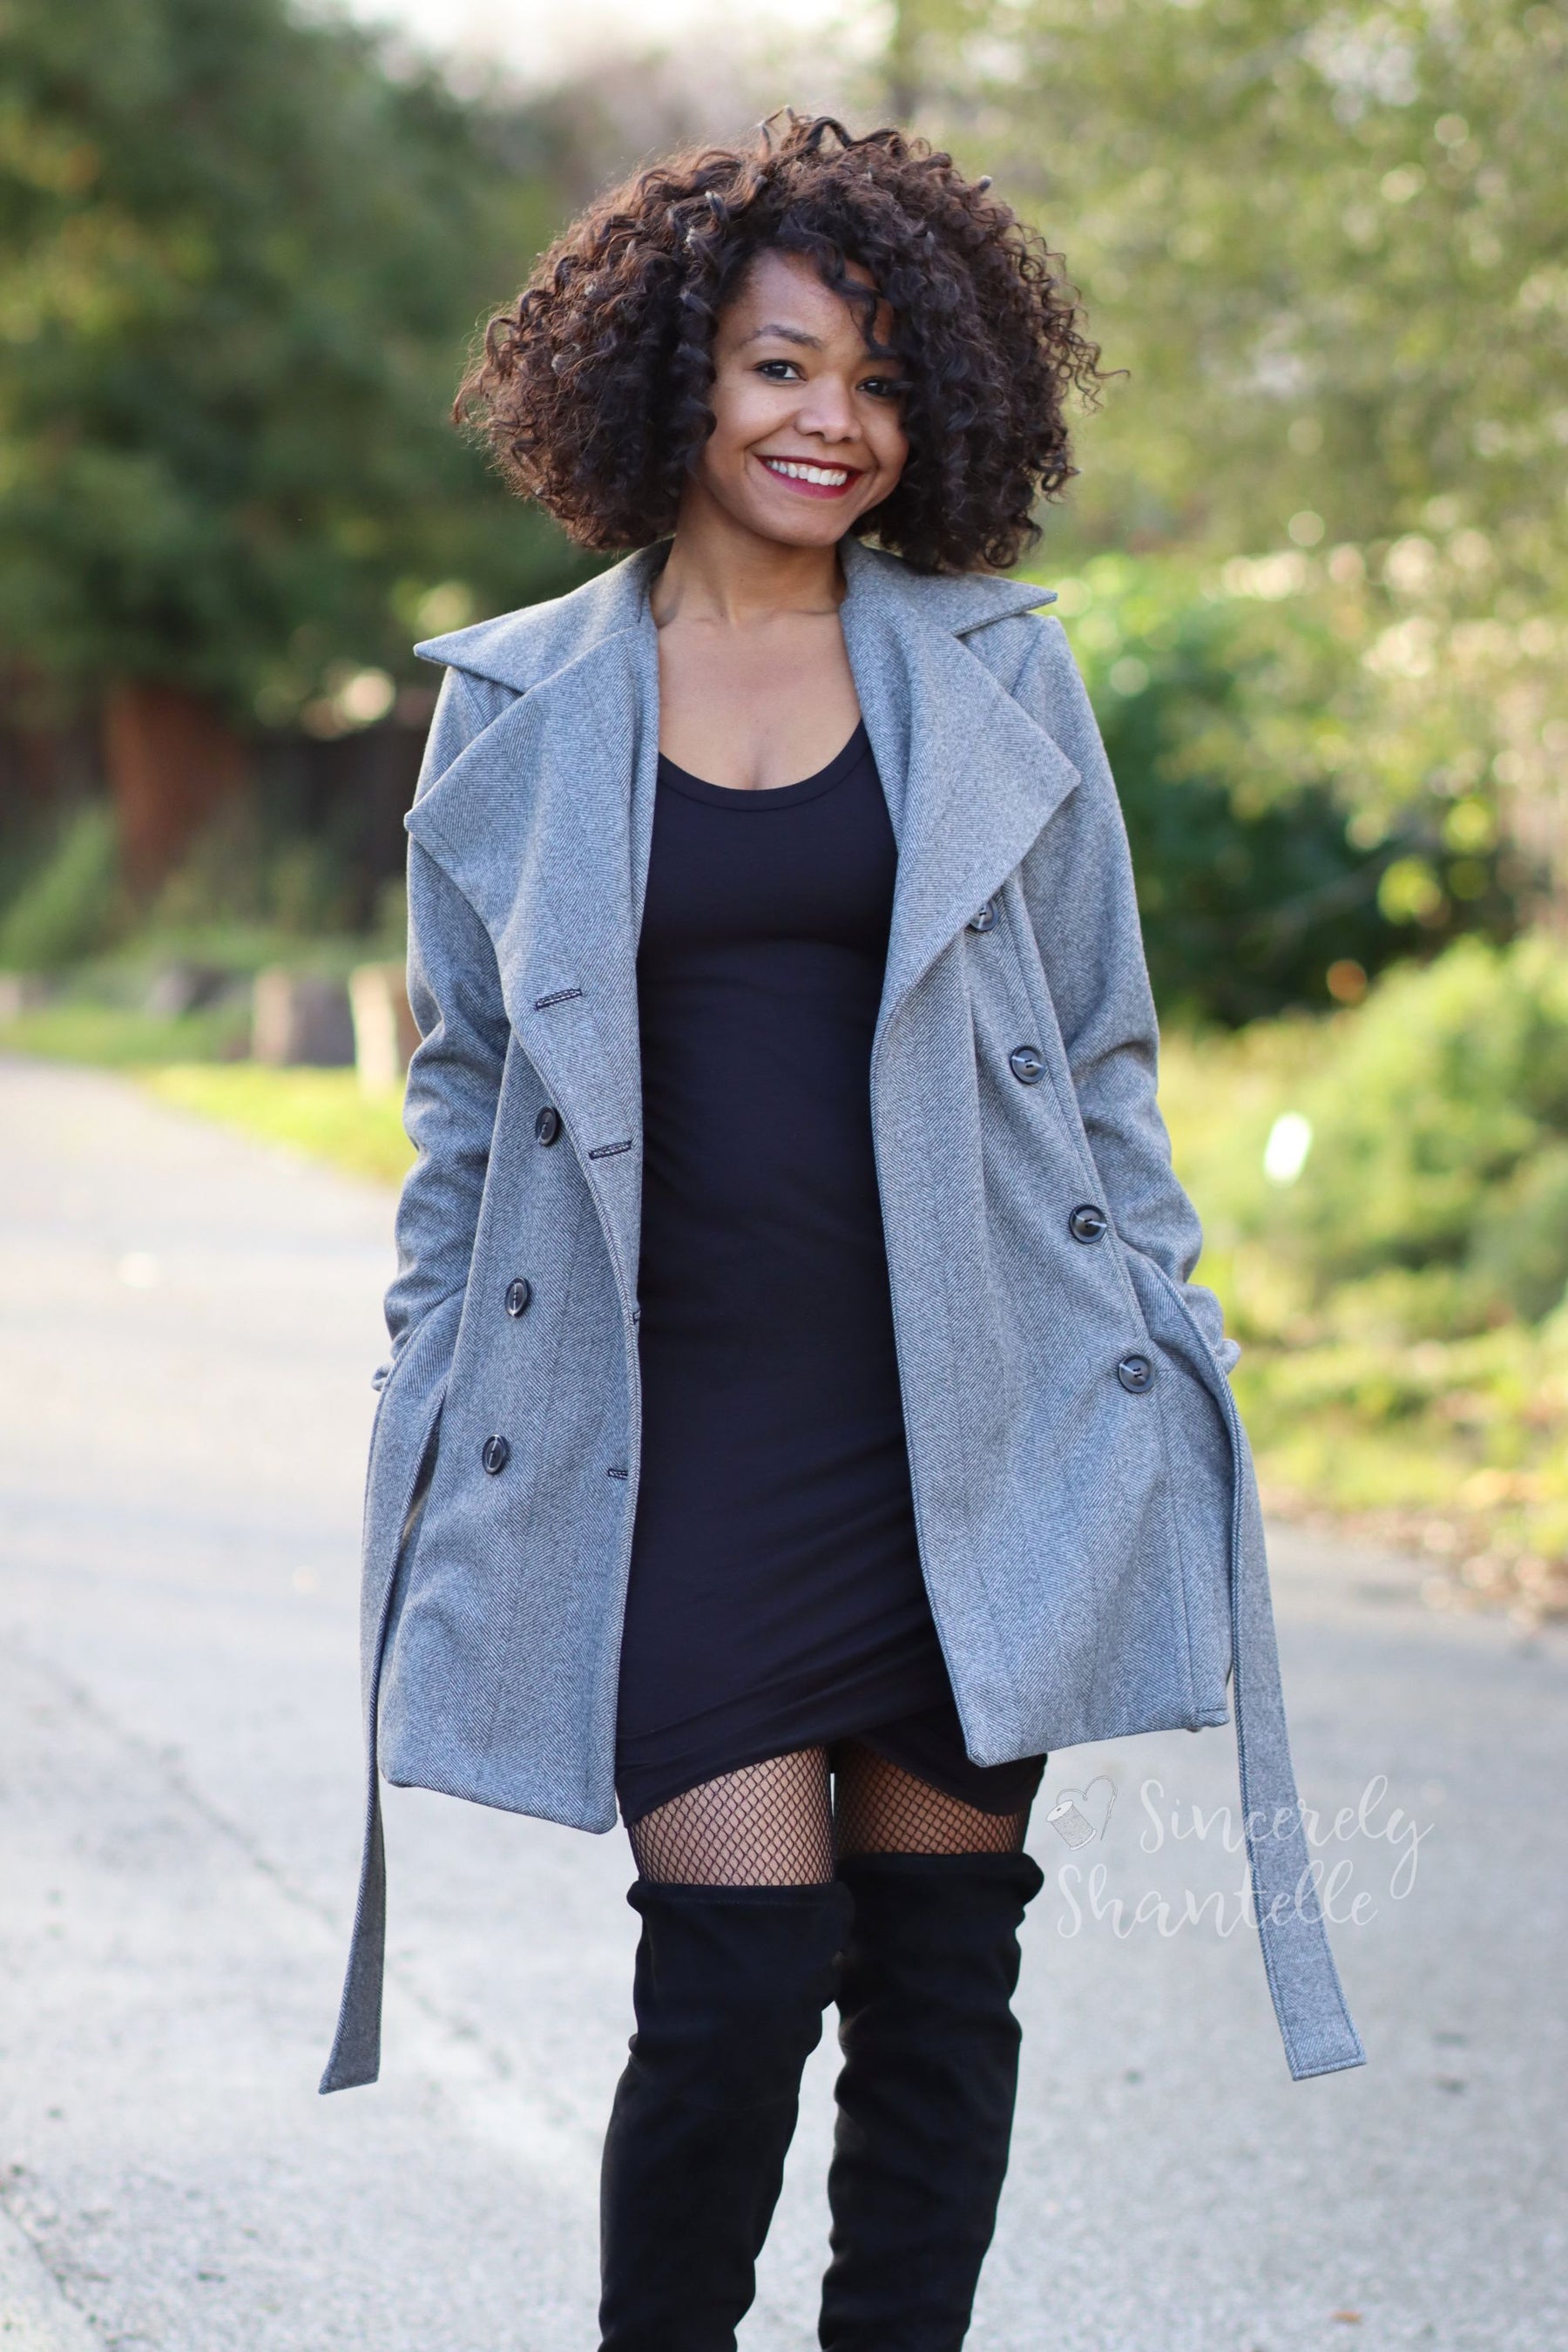 The Coat Dress Trend  LivingLesh - a fashion and lifestyle blog